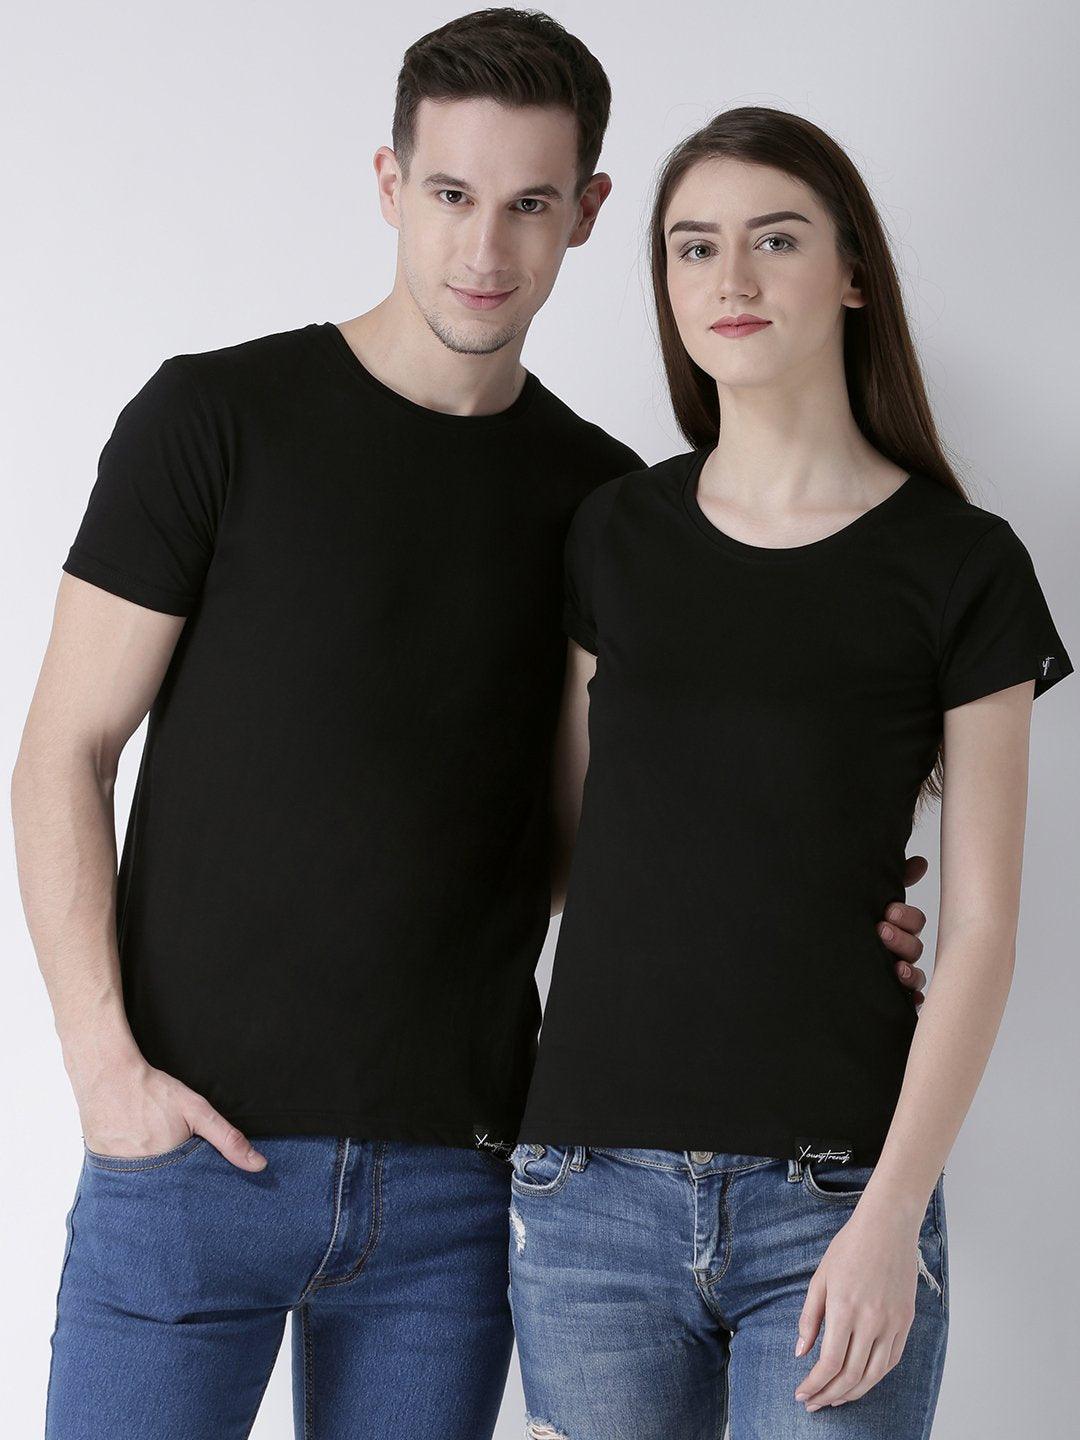 black t shirt couple